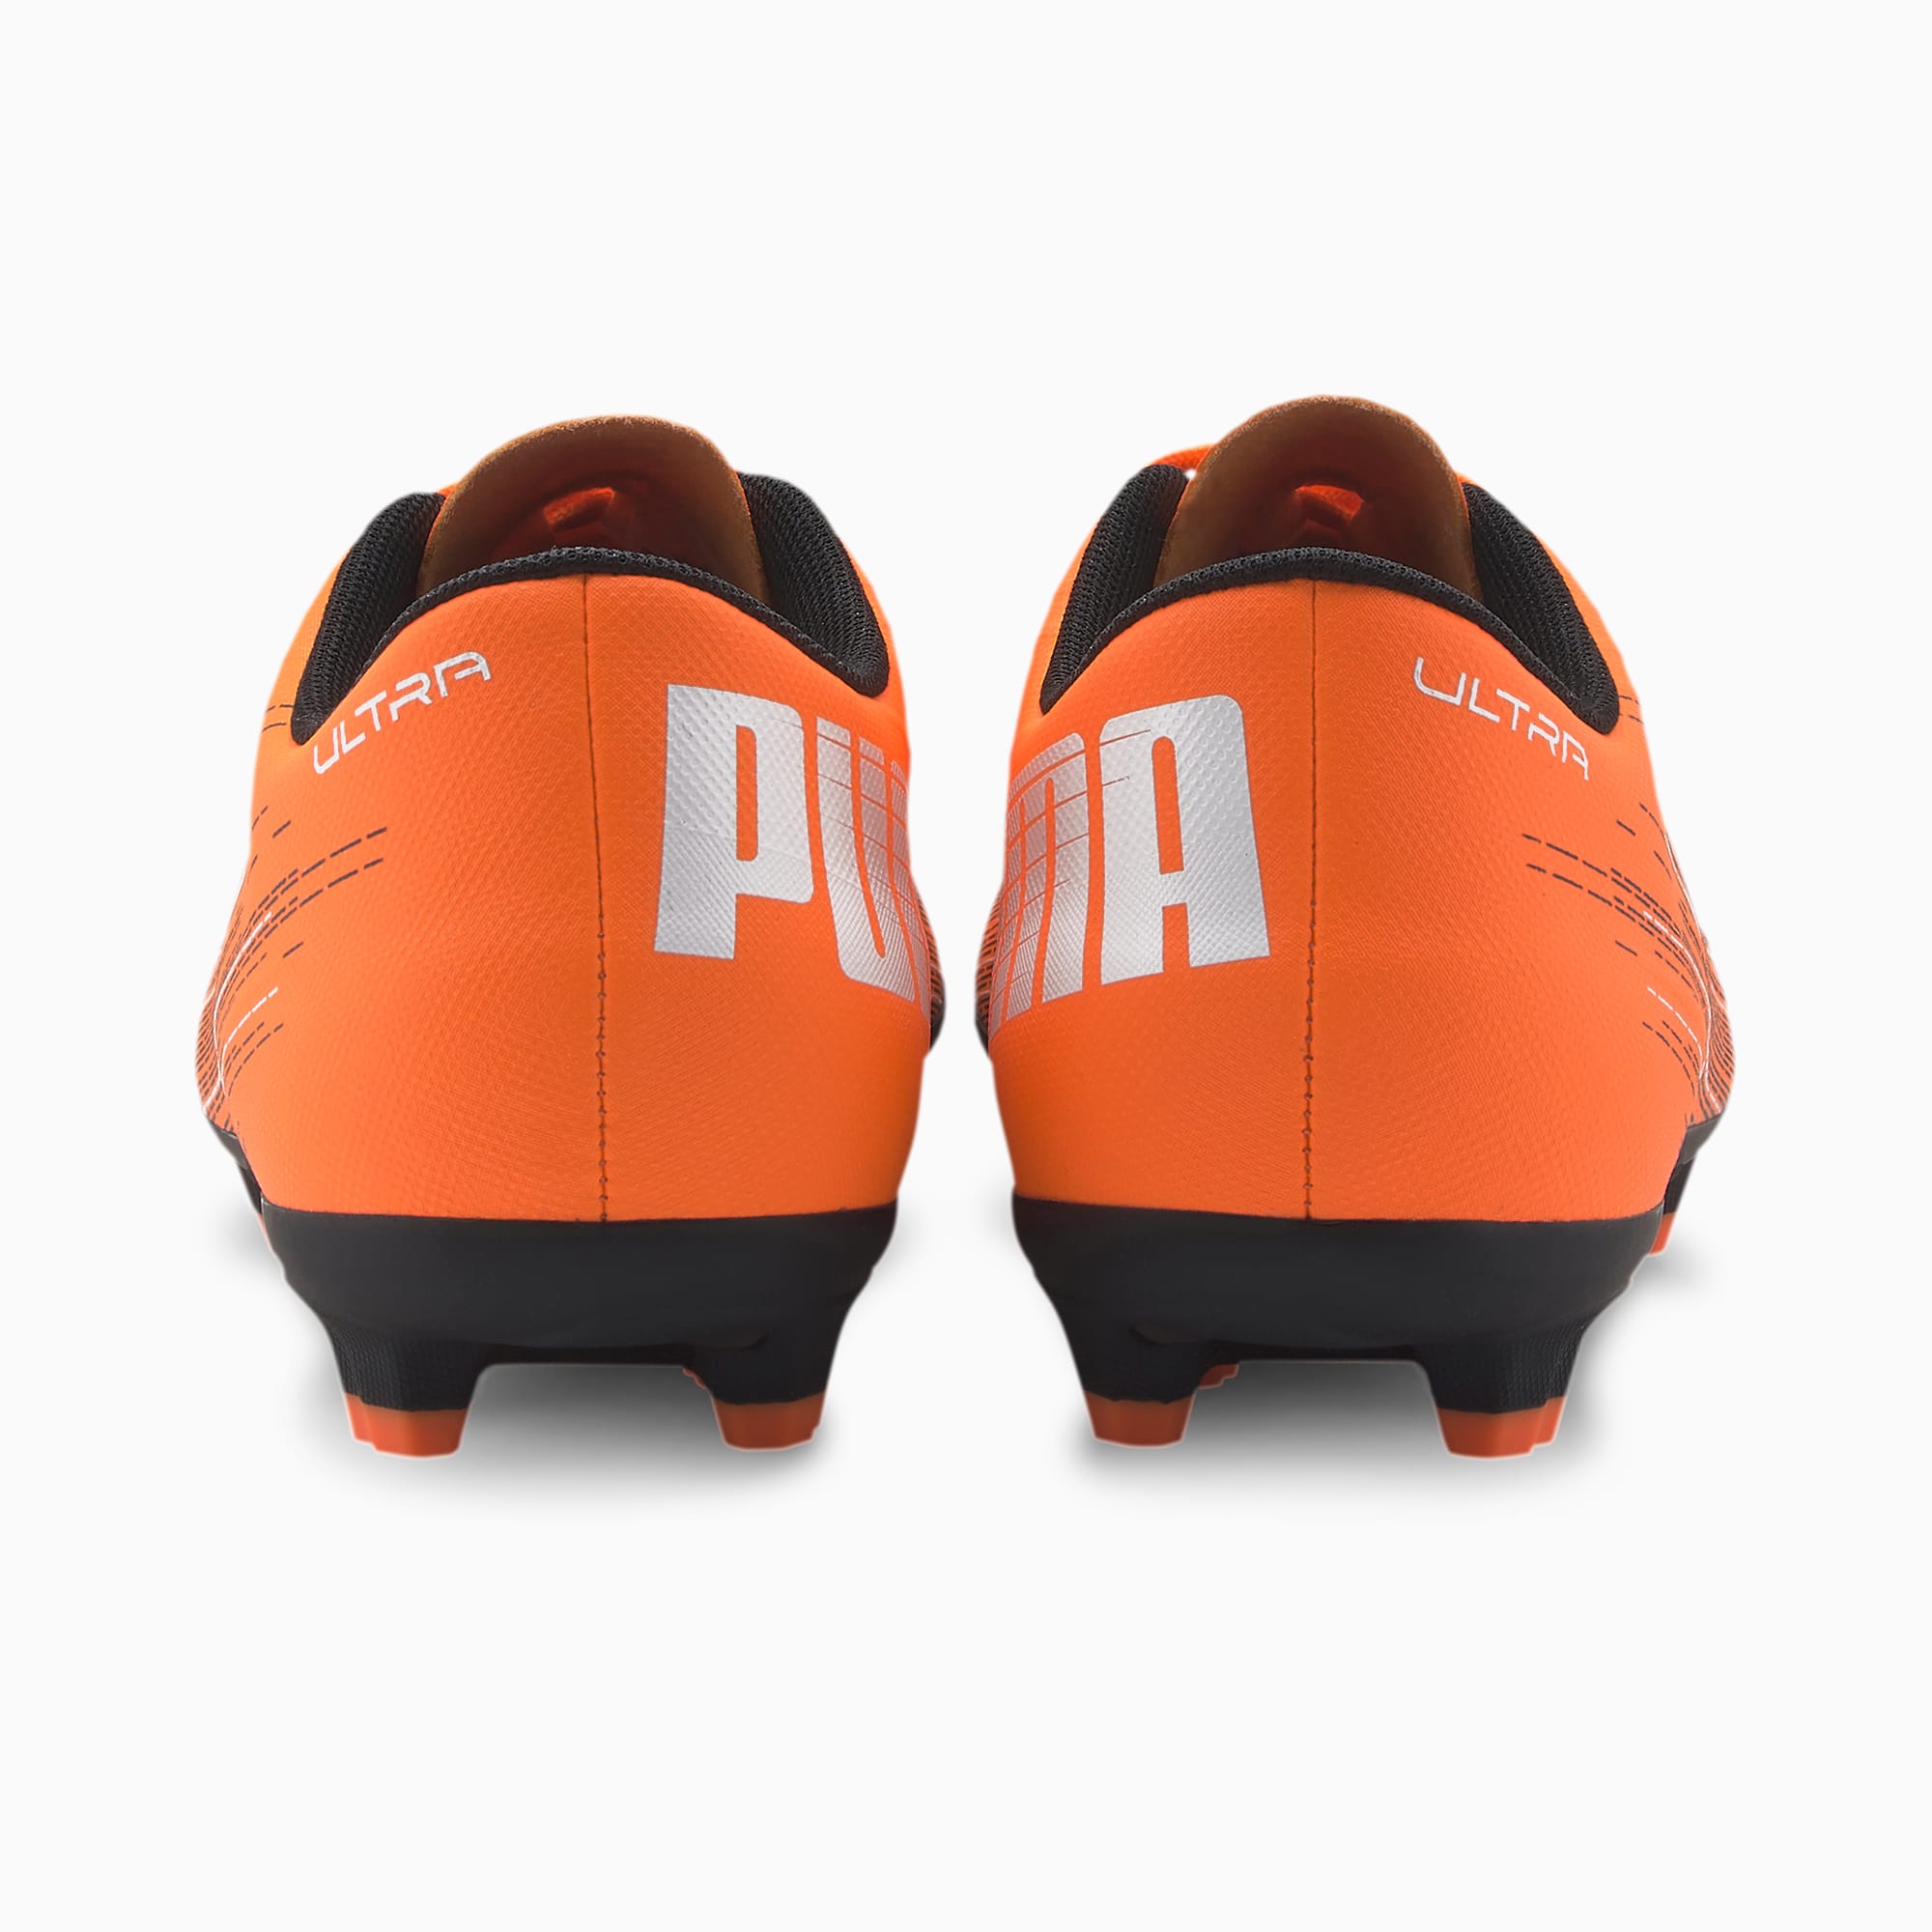 Puma公式 ウルトラ 4 1 Hg サッカー スパイク 硬い土 人工芝用 メンズ Shocking Orange Puma Black プーマ セール プーマ